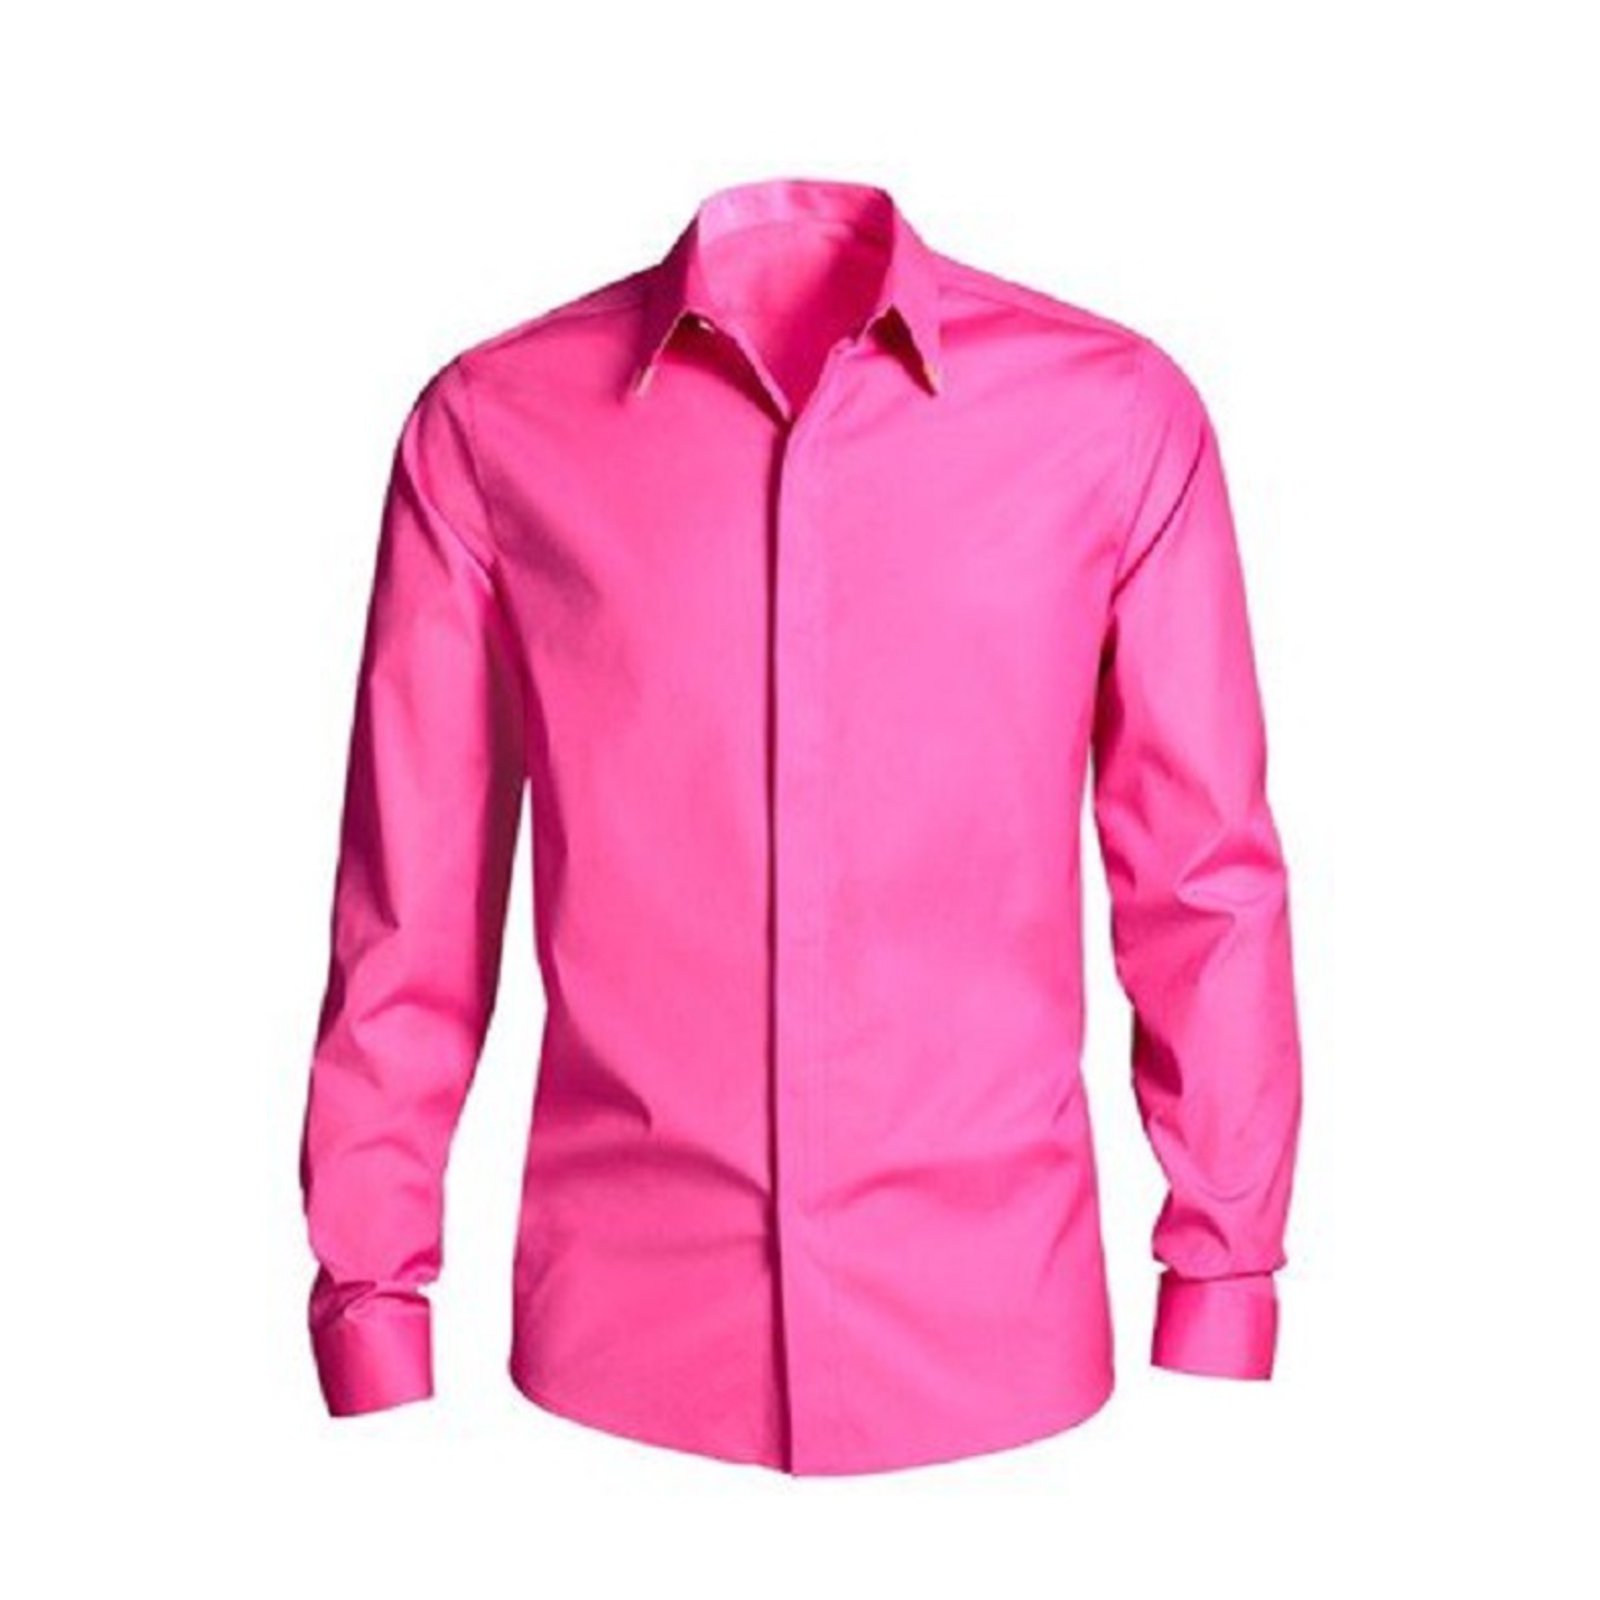 versace pink shirt mens